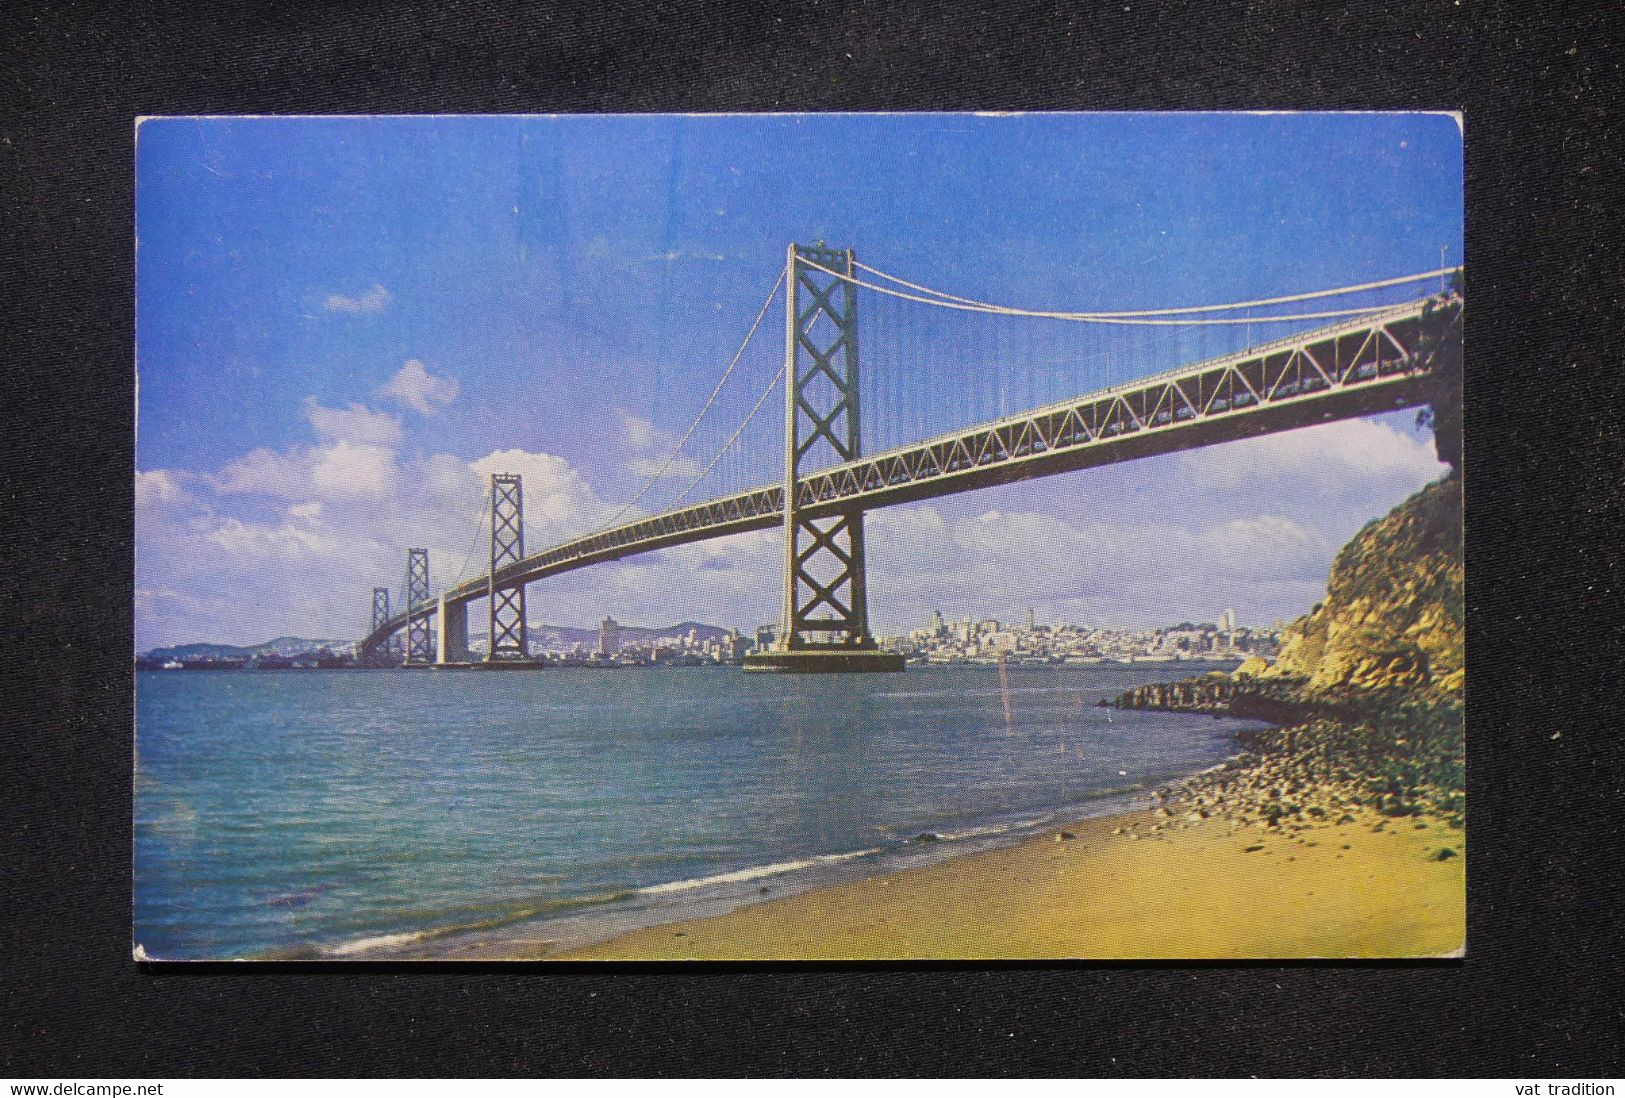 CANADA - Taxe De Montréal Sur Carte Postale De San Francisco En 1950 - L 106348 - Brieven En Documenten